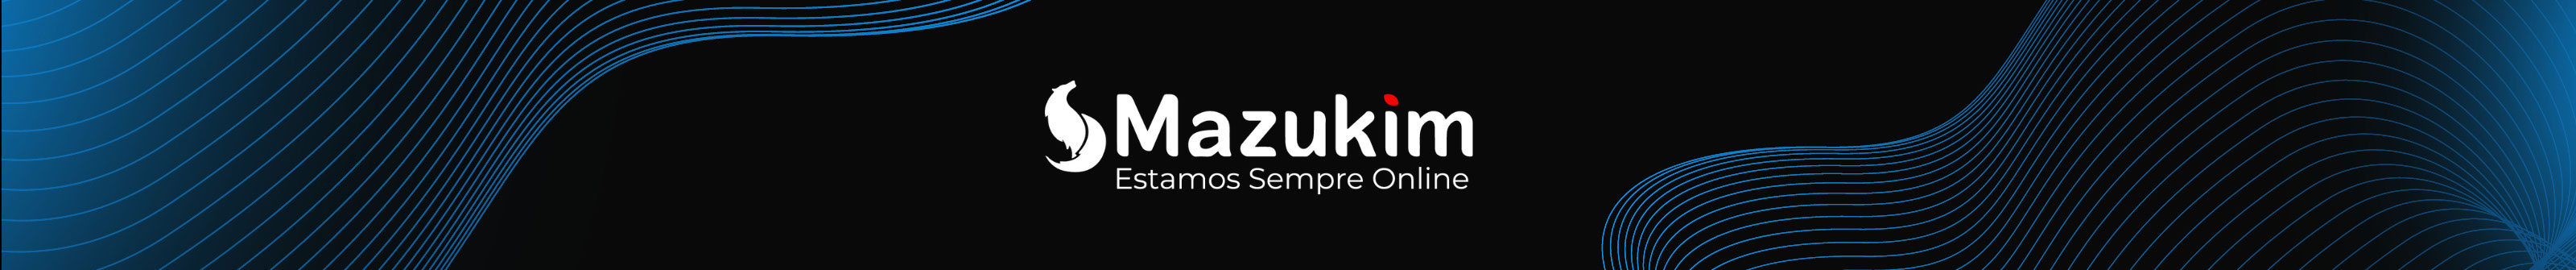 Mazukim Marketing's profile banner